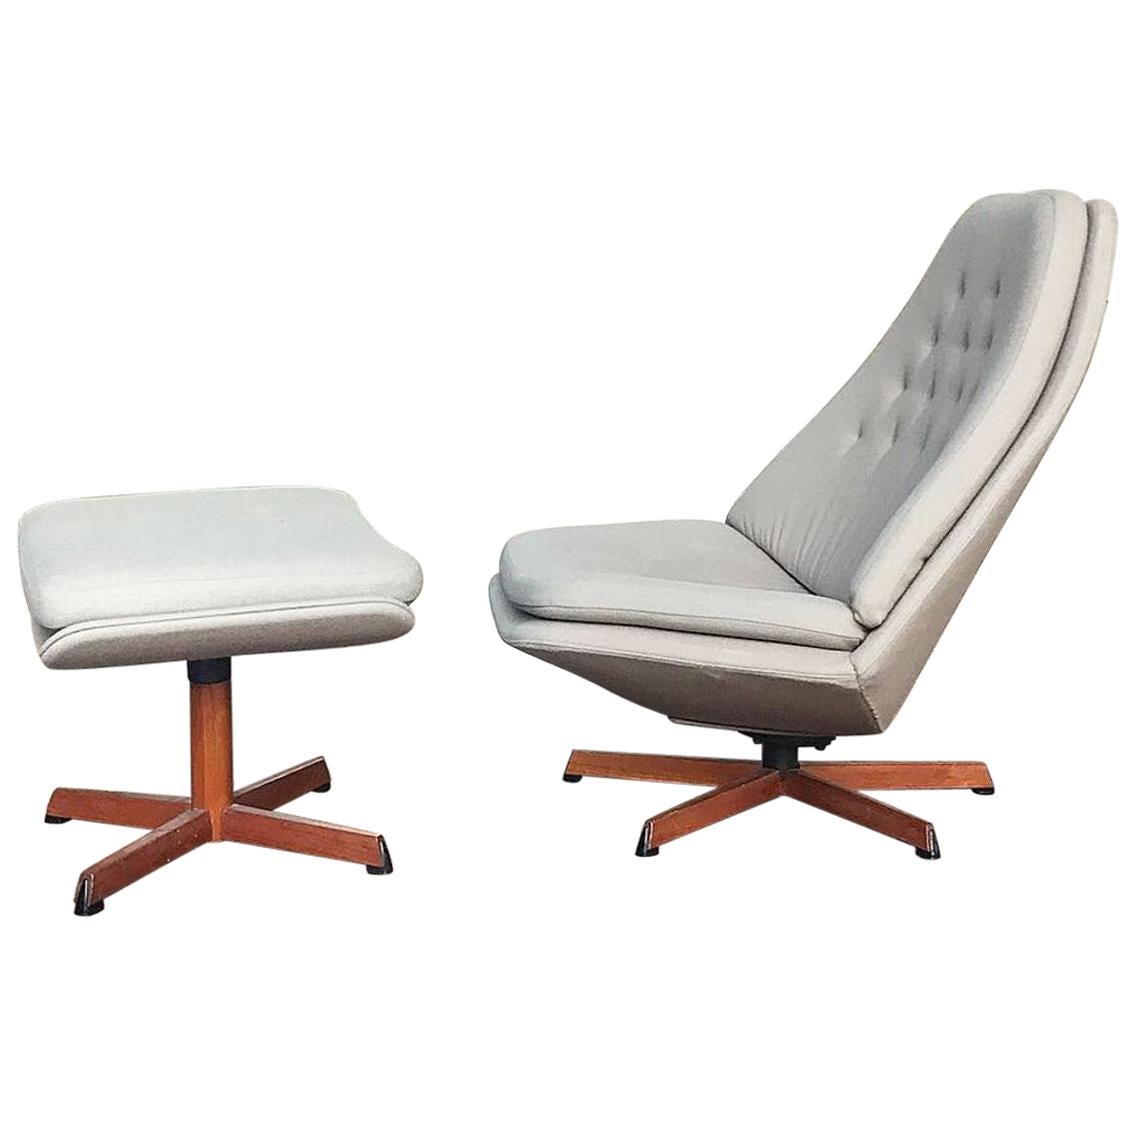 Danish Swivel Lounge Chair Model Ms68 with Ottoman by Madsen & Schübel